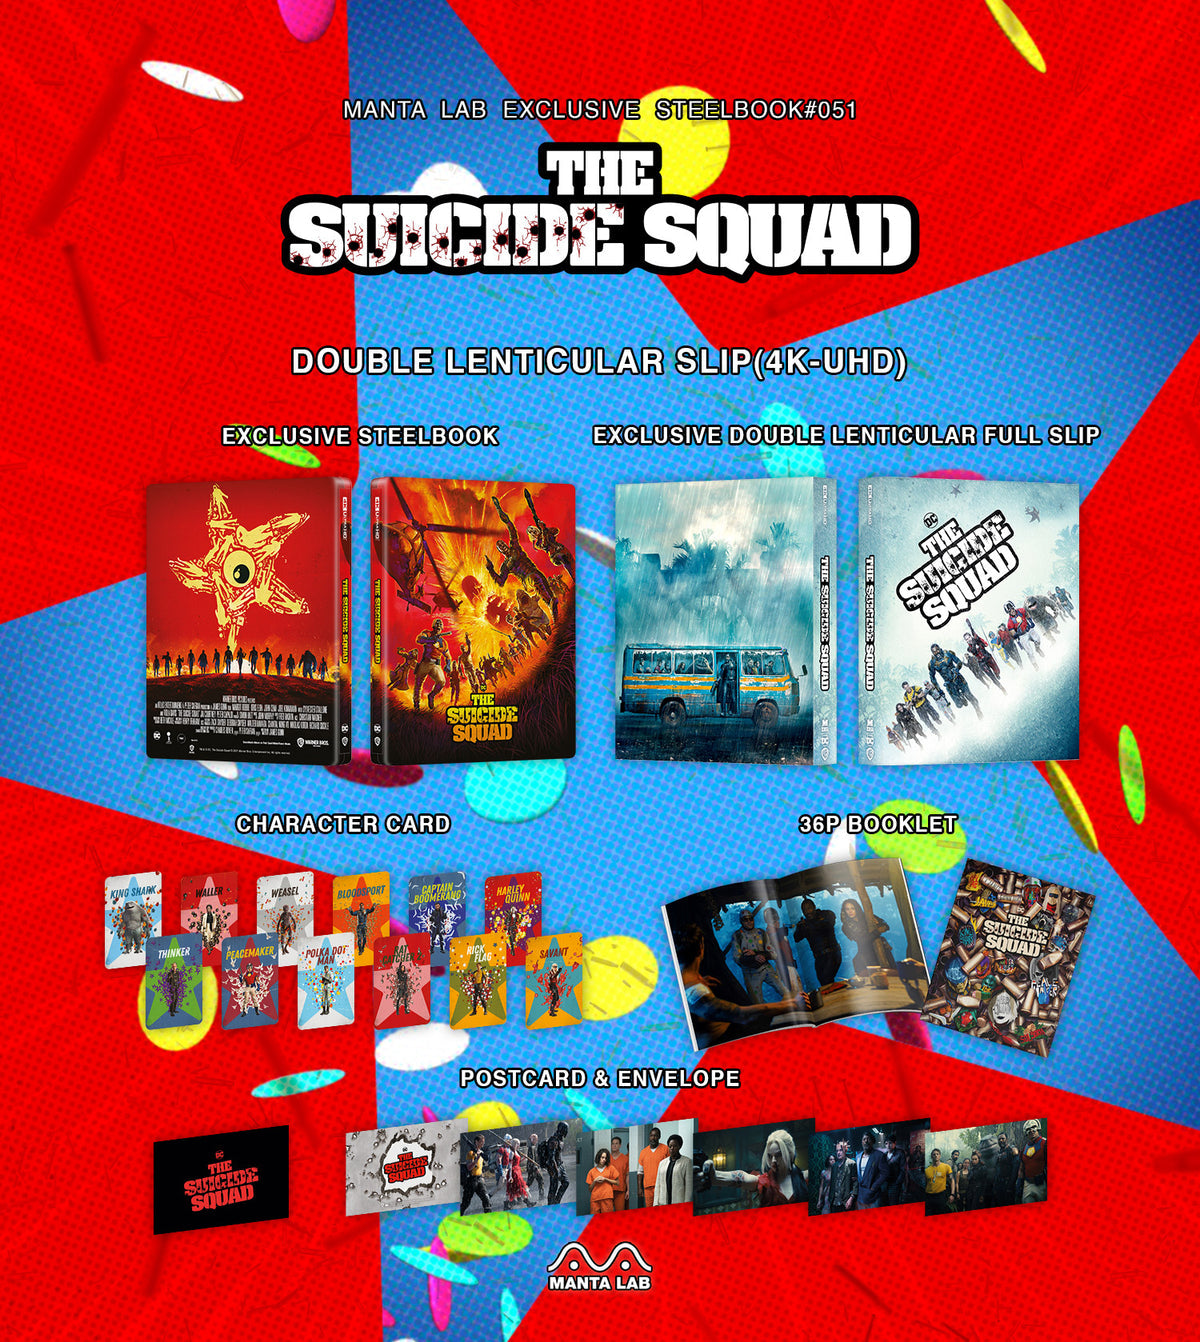 The Suicide Squad (2021) (4K+2D Blu-ray SteelBook) (Manta Lab Exclusive No. 51) One Click Box Set